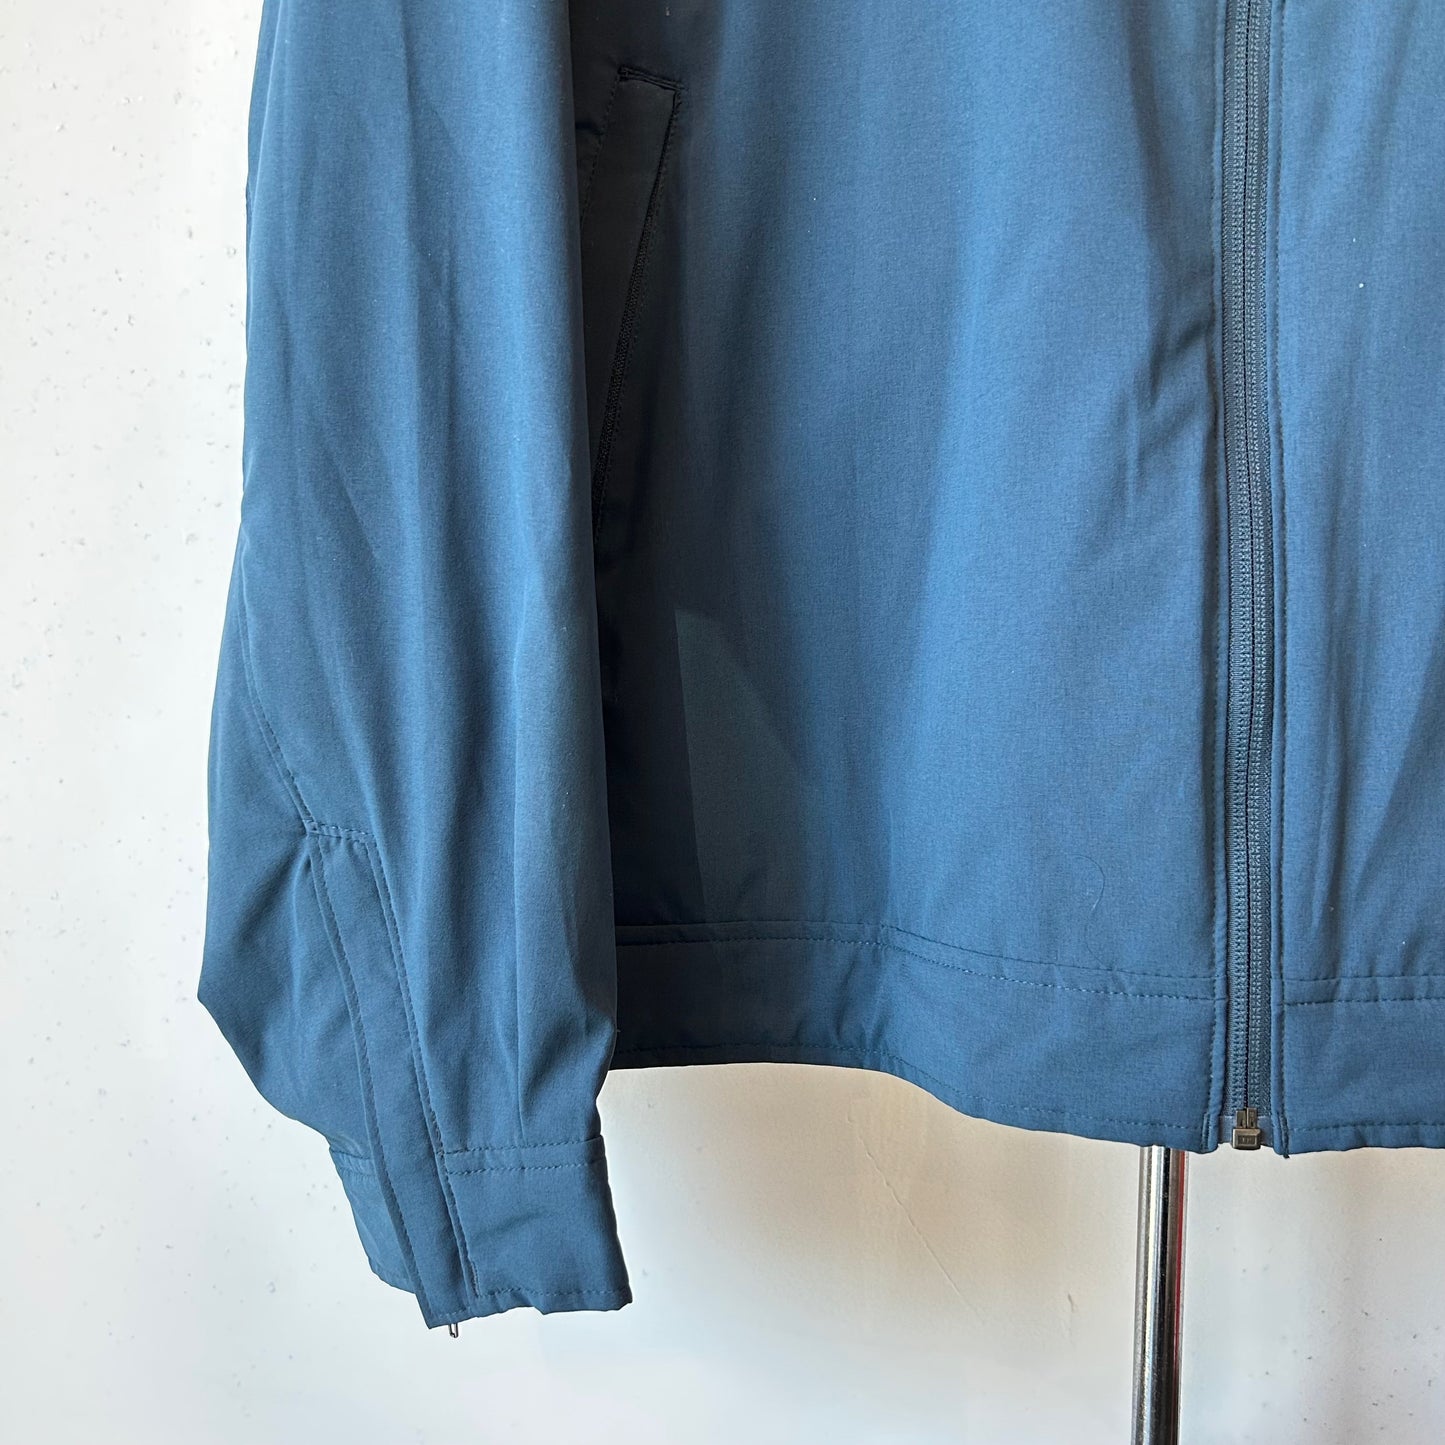 XXL Blue REI Jacket